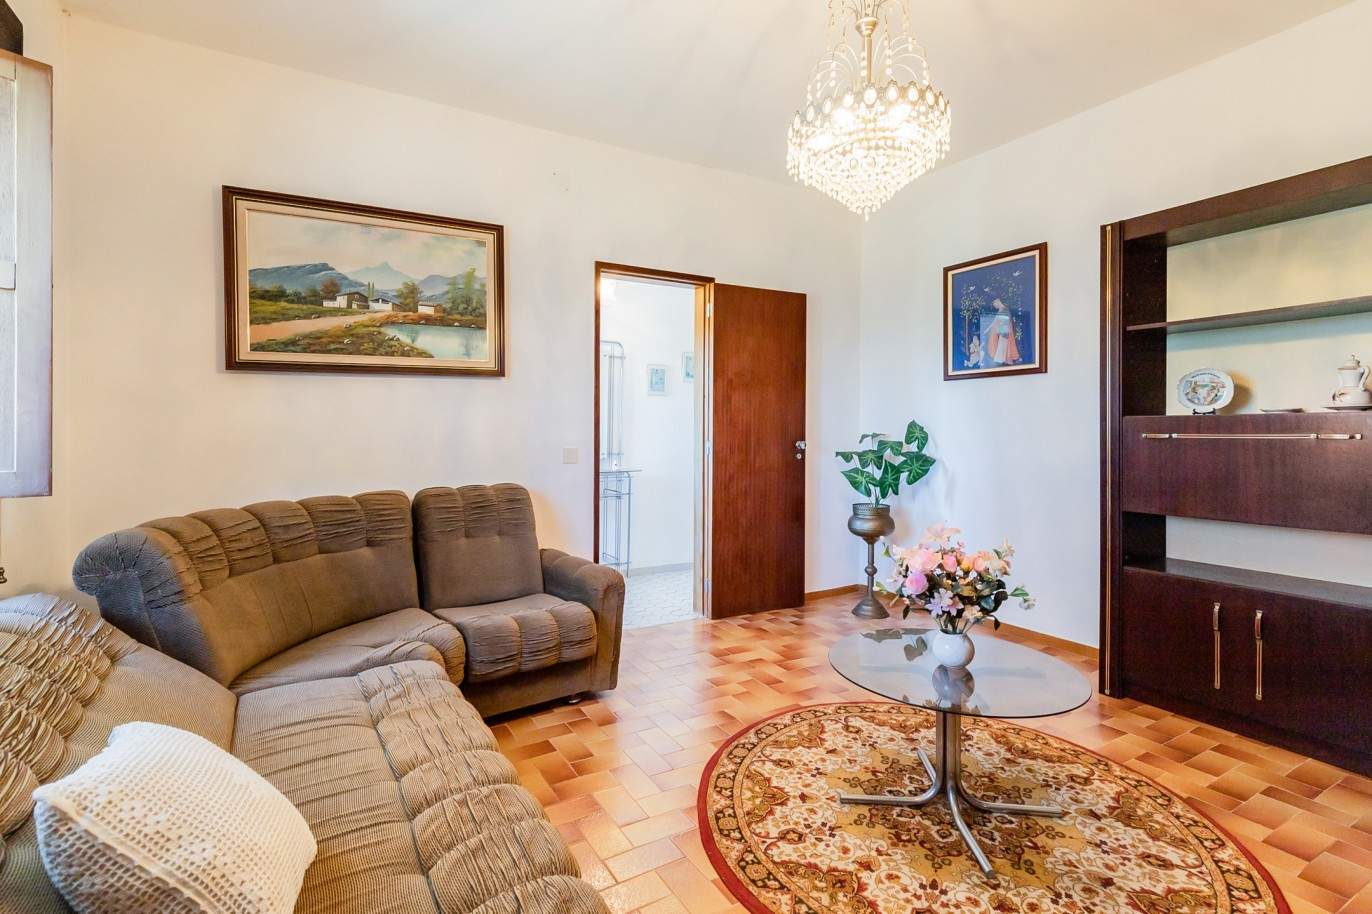 Property to remodel, for sale in Falfeira, Lagos, Algarve_210369